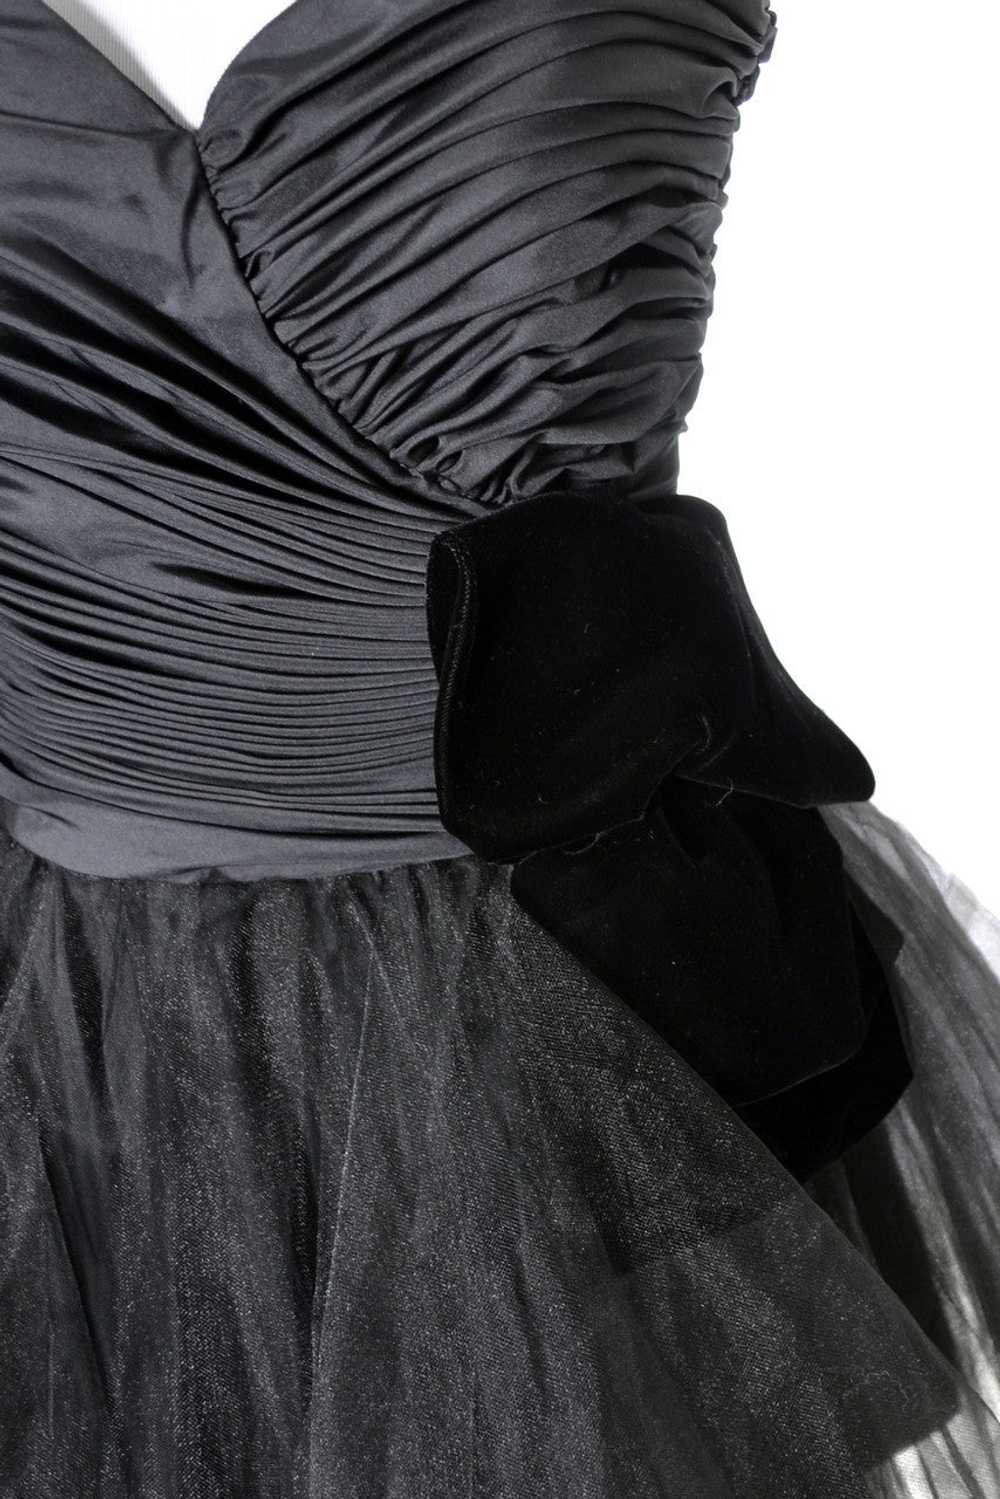 1980's Lillie Rubin Black Strapless Party Dress - image 5